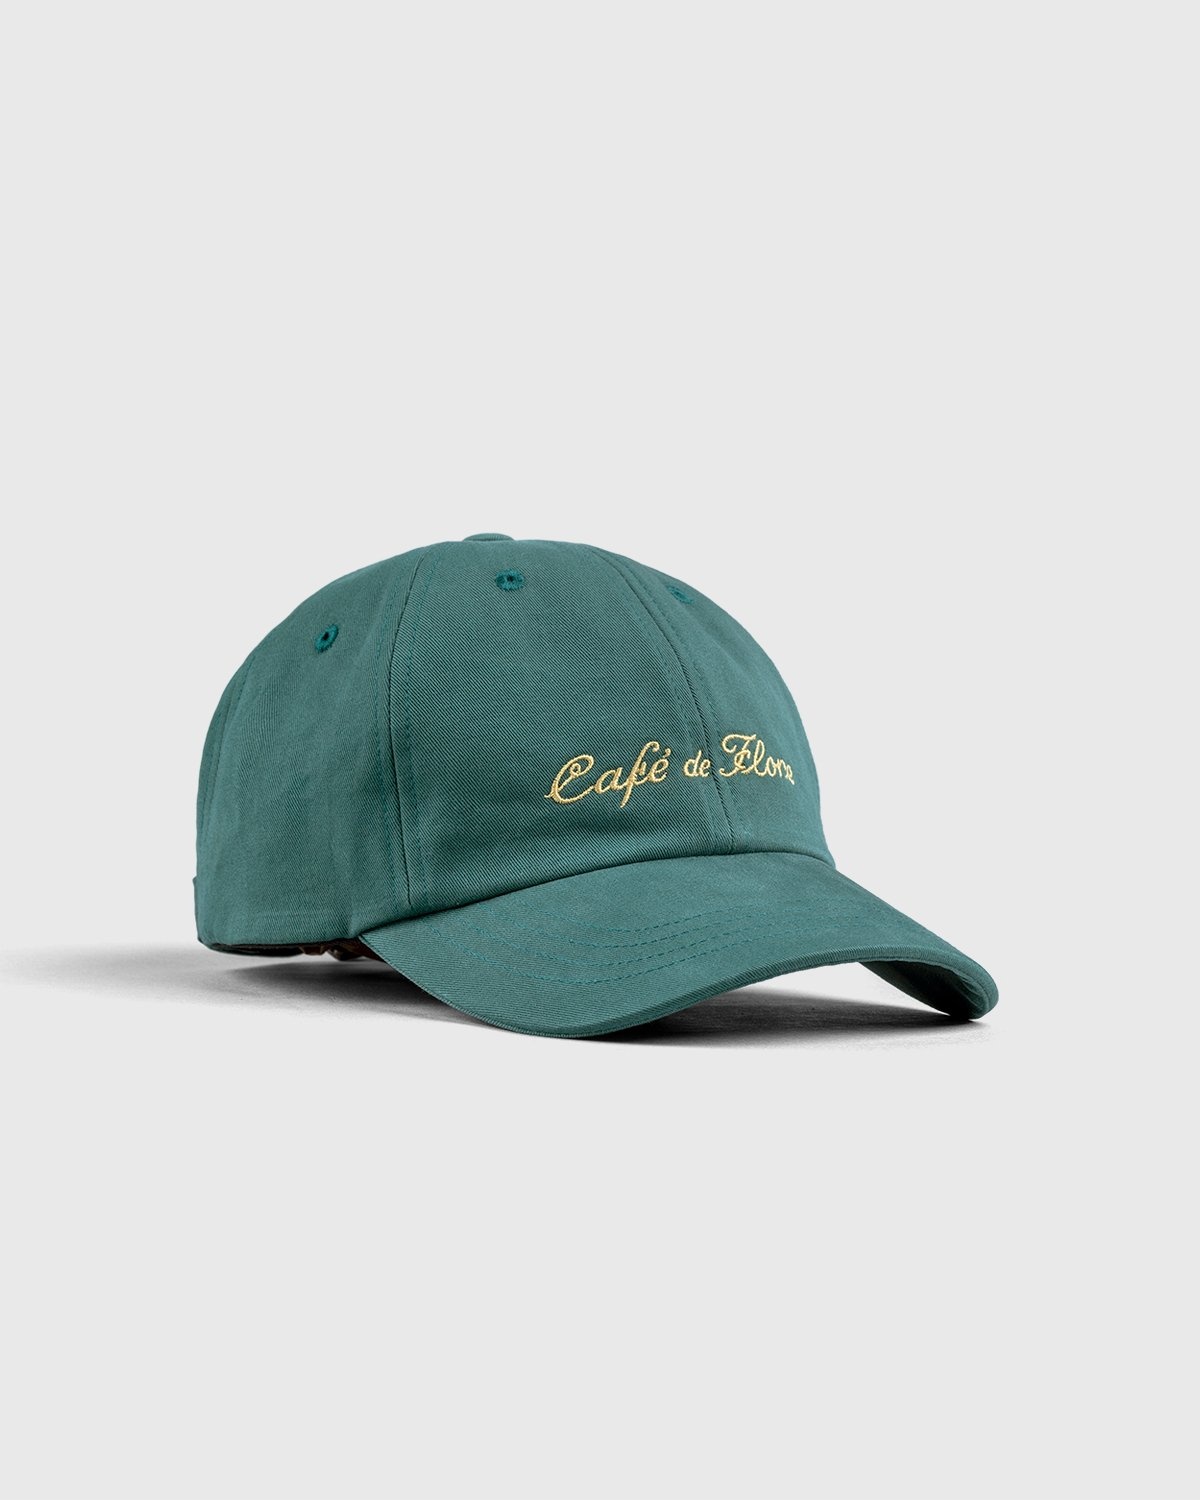 Highsnobiety – Not In Paris 3 x Café De Flore Cap Green - Hats - Green - Image 1